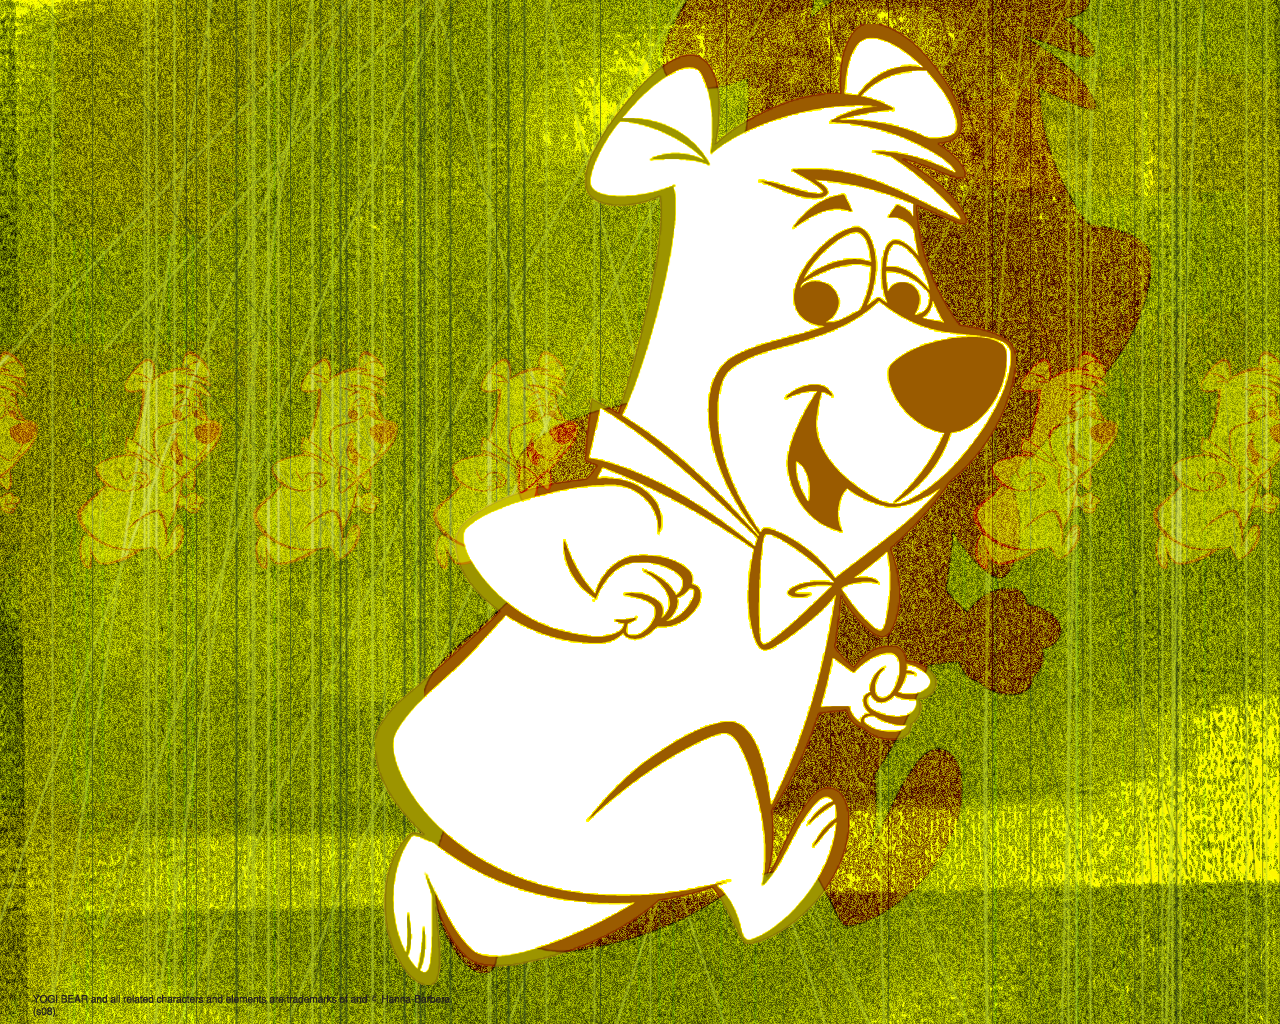 Hanna Barbera - Hanna Barbera Wallpaper (25844229) - Fanpop